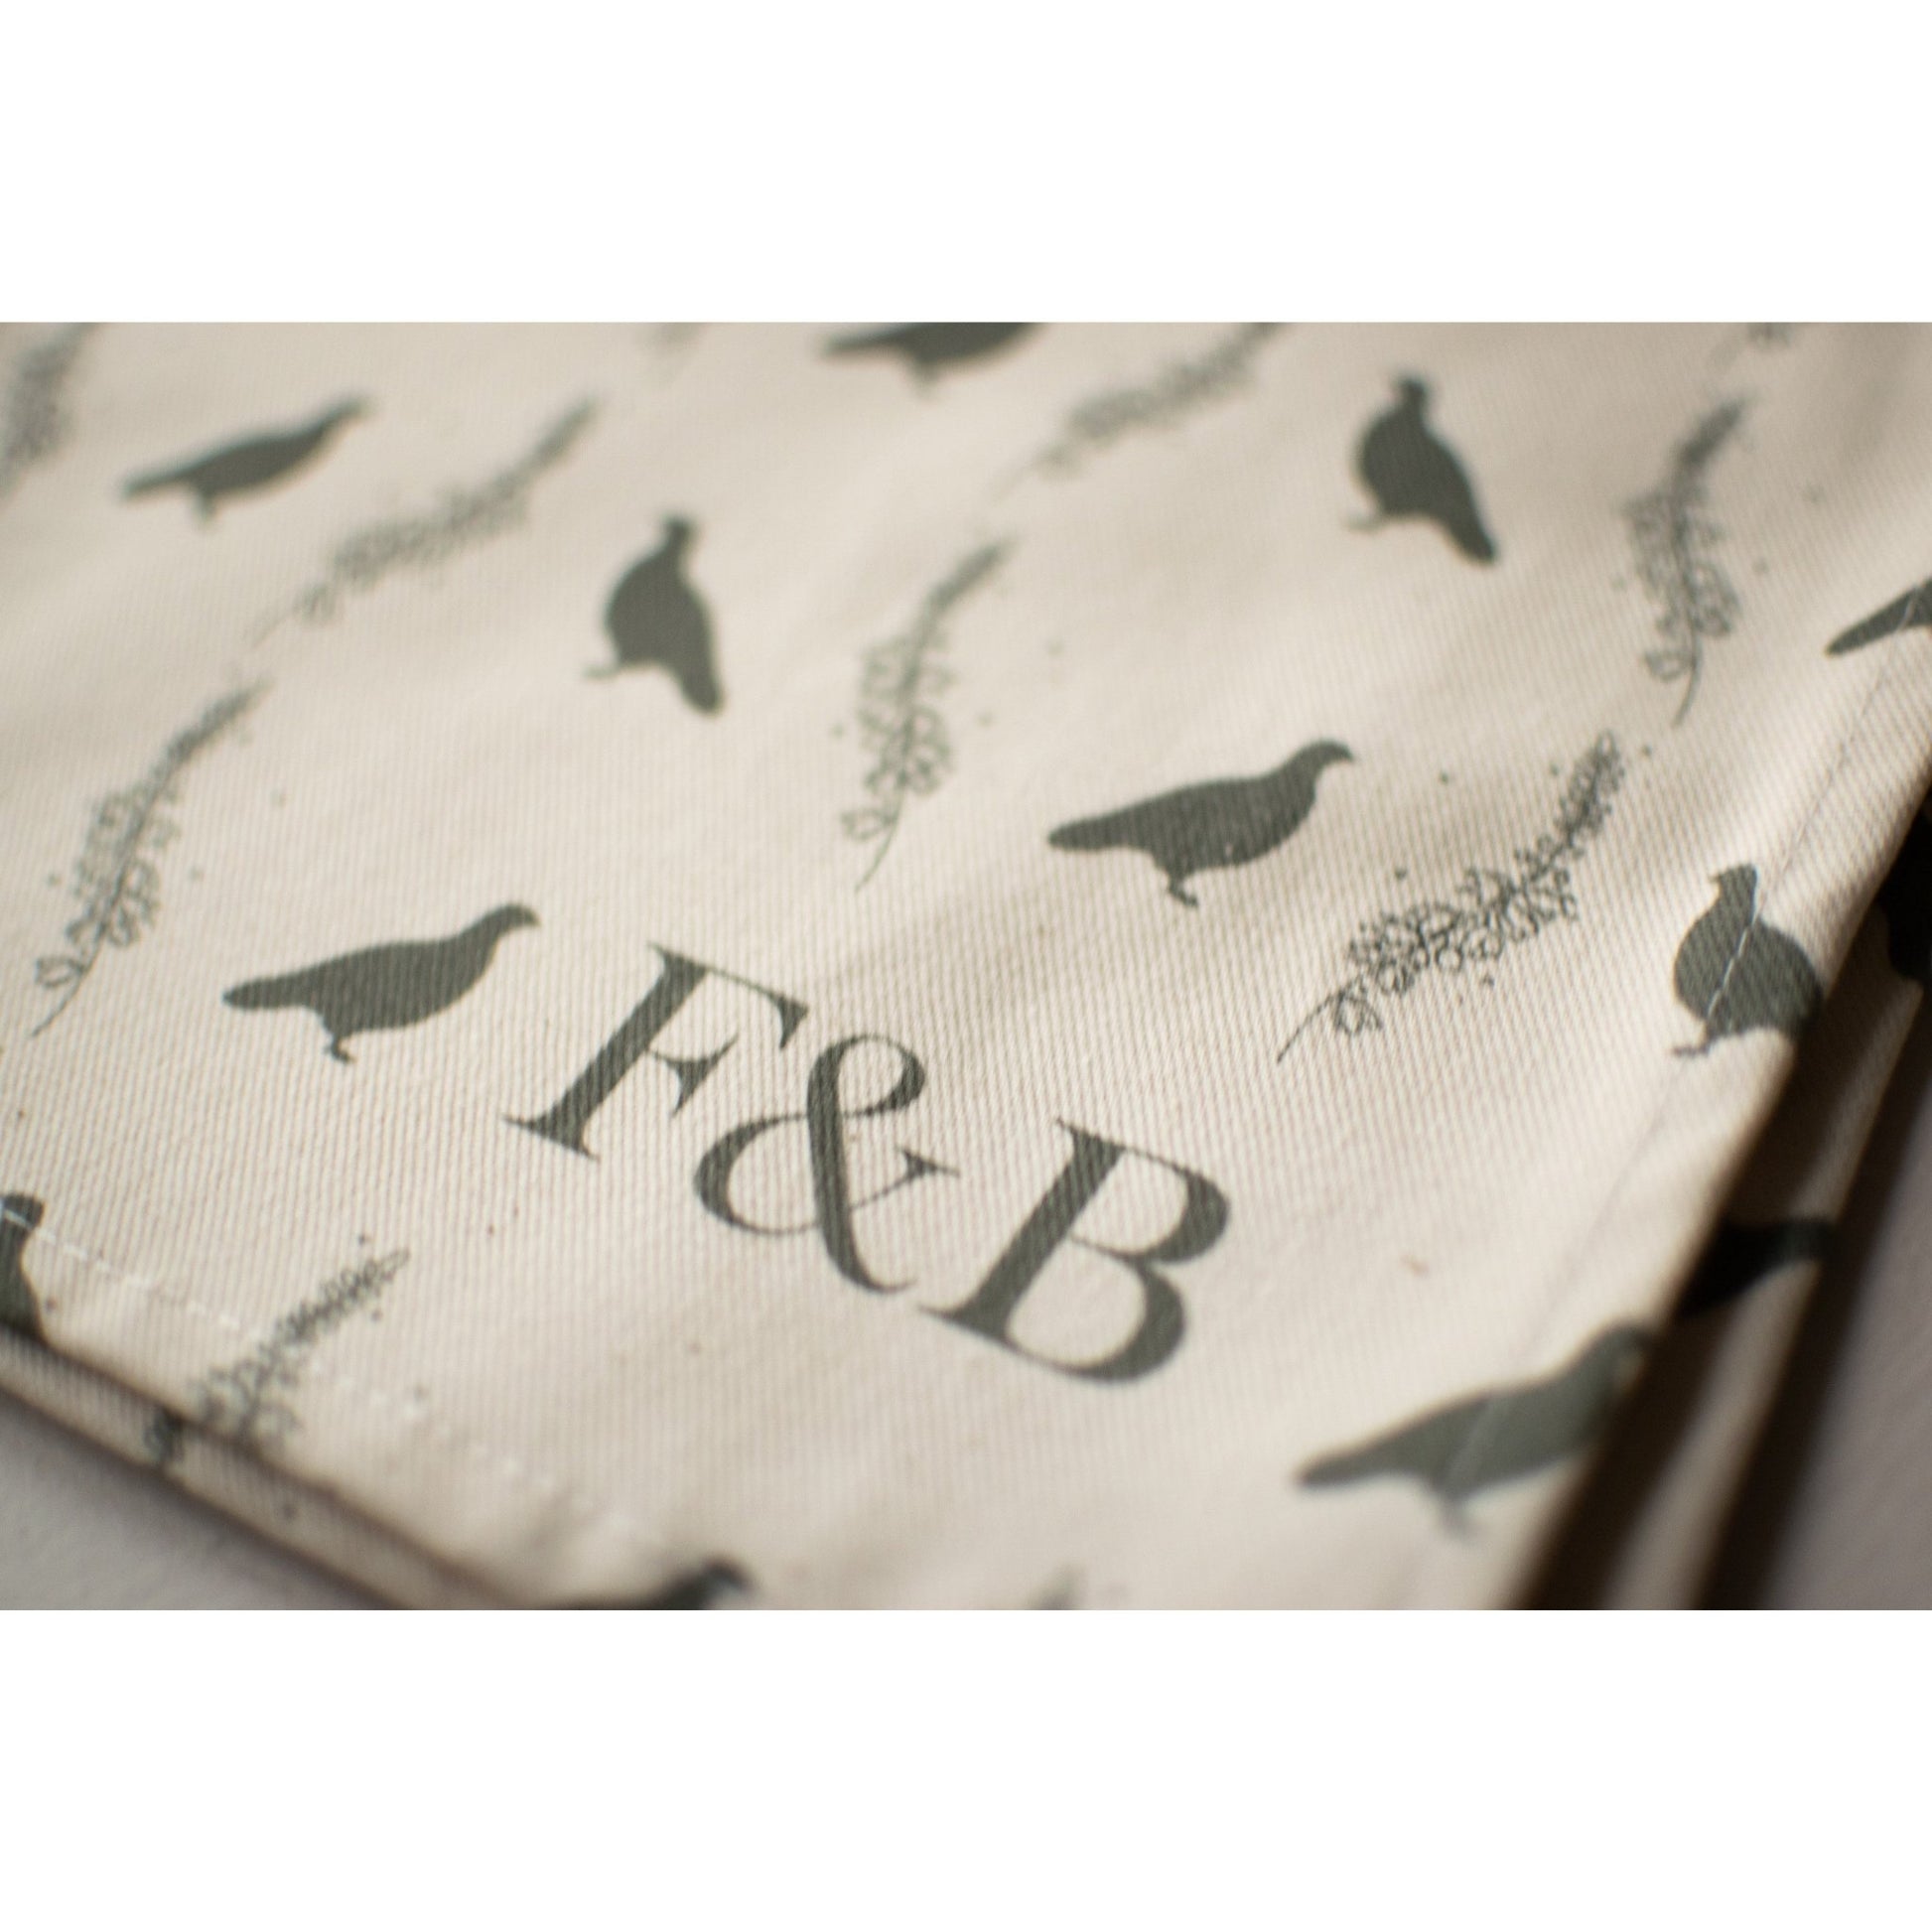 Grouse & Heather Tea Towels - F&B Crafts - F&B Designs